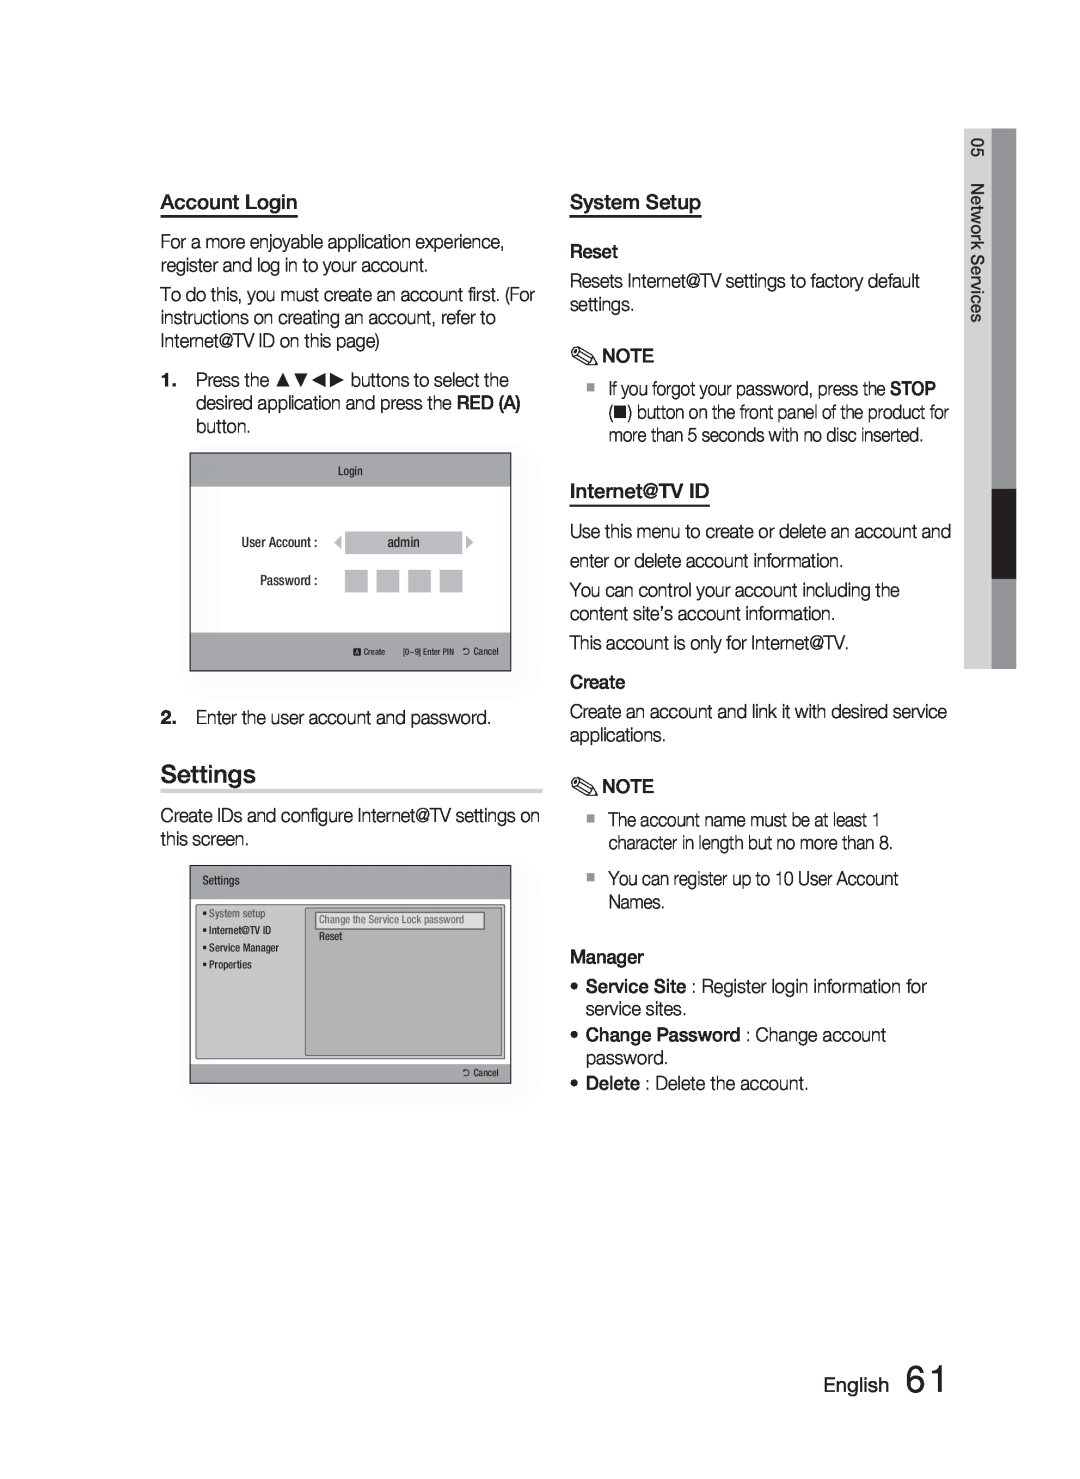 Samsung AH68-02279R user manual Settings, Account Login, System Setup, Internet@TV ID, English 